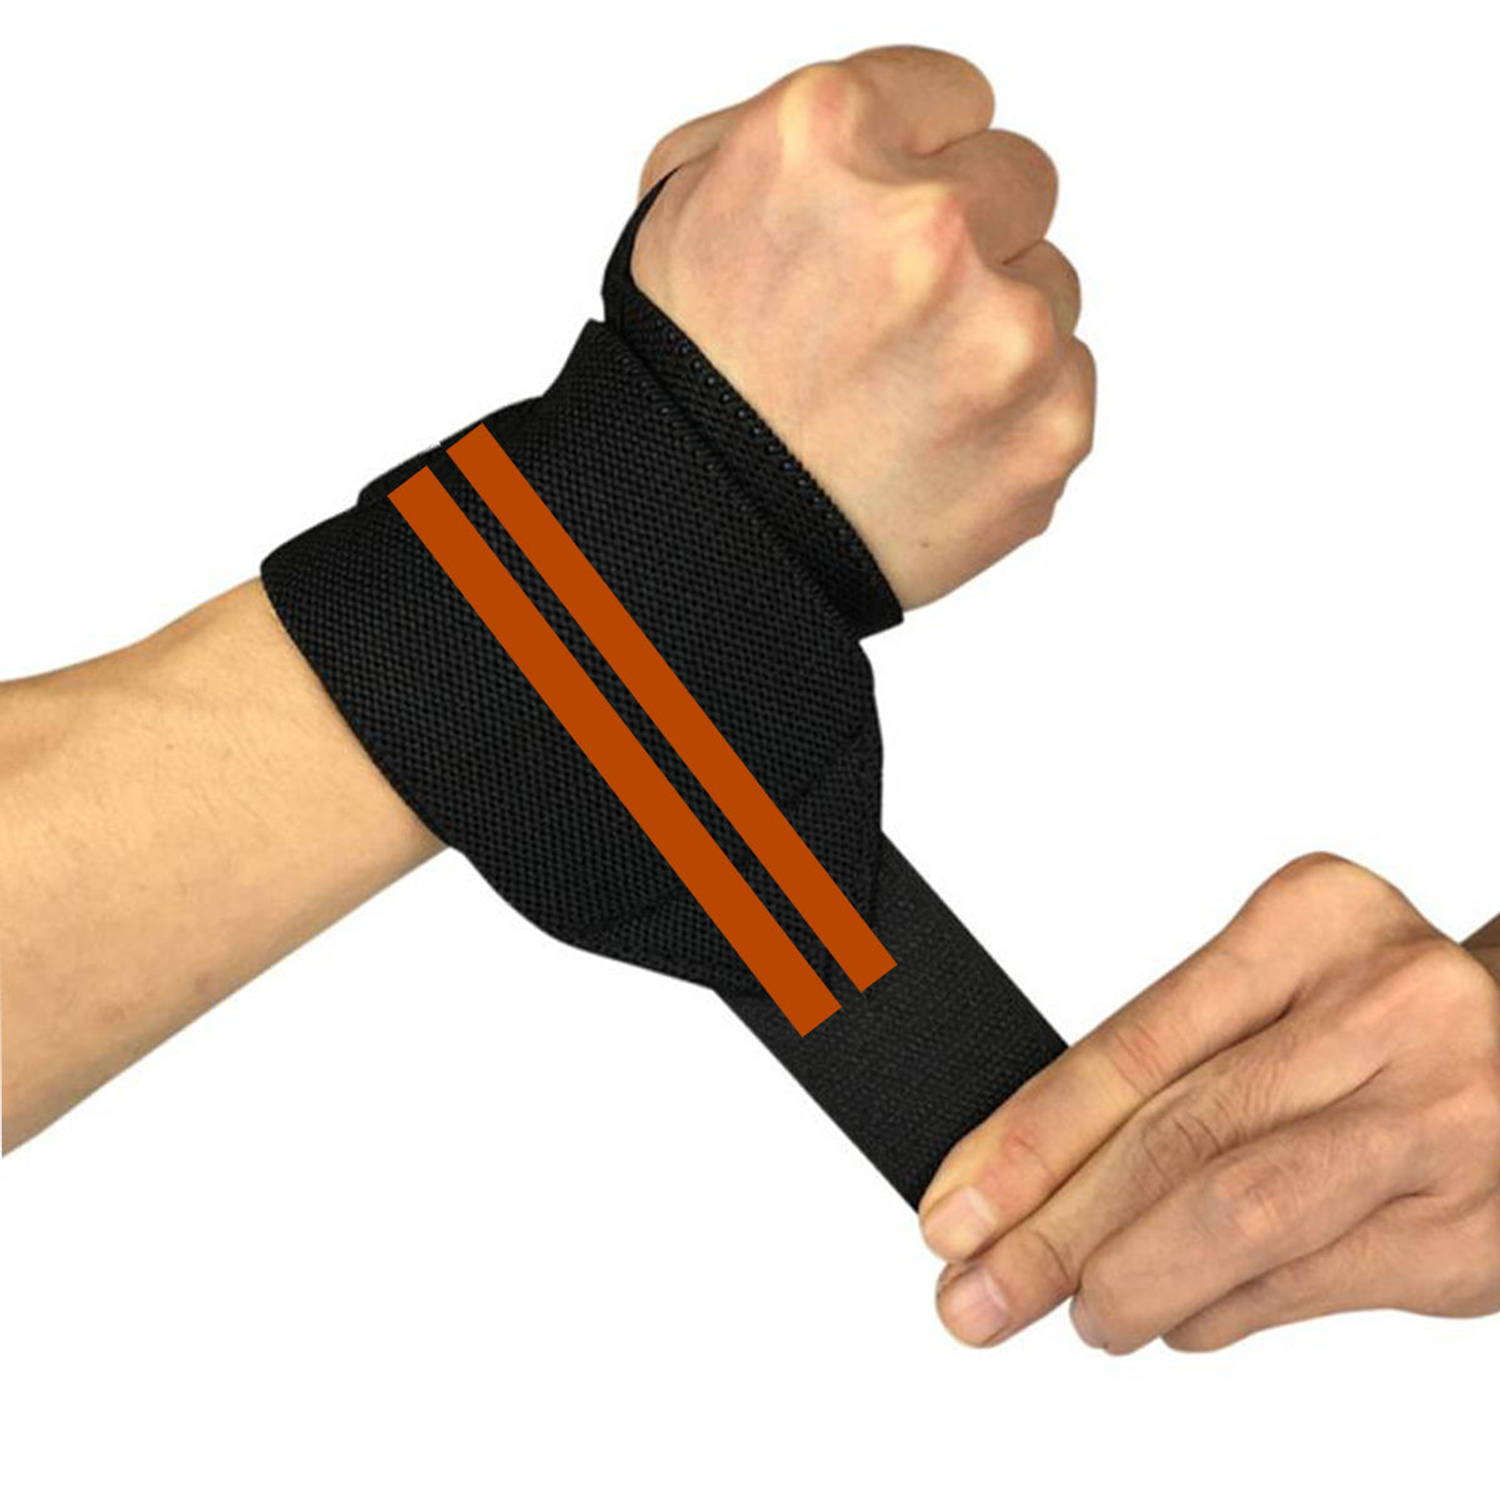 Fitness / Crossfit Polsband - 2 stuks - Oranje / Zwart - Polsbandage Wrist Support Wraps - Pols Bandage Band - Bodybuilding Support - Gewichthef Straps - Krachttraining Lifting Wor